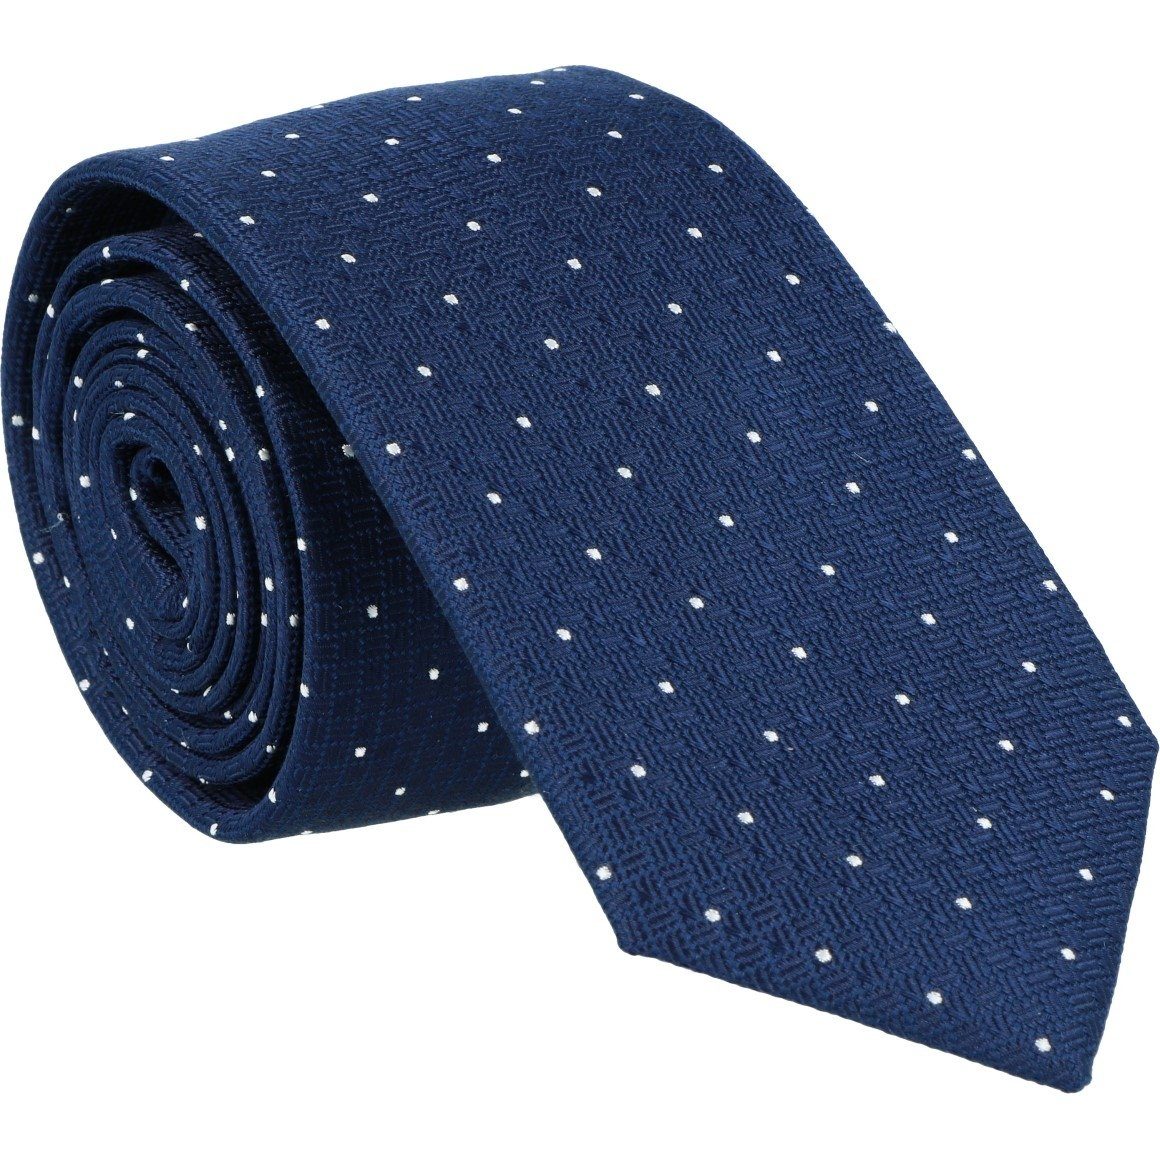 WILLEN Krawatte Willen Krawatte blau